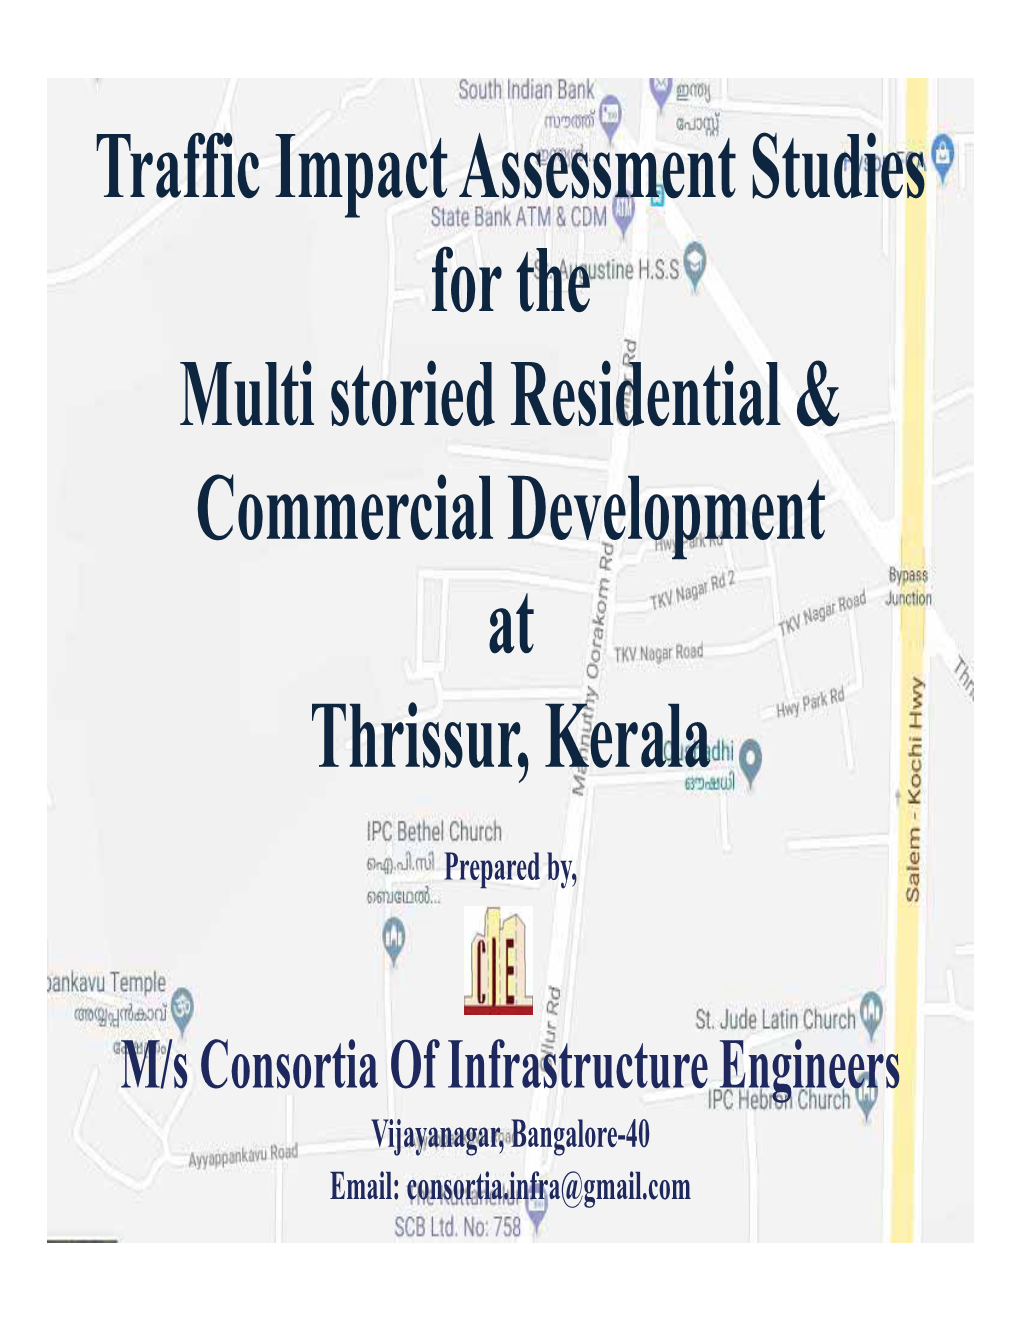 Traffic Impact Assessment Studies for the Multi Storied Residential & Commercial Development at Thrissur, Kerala